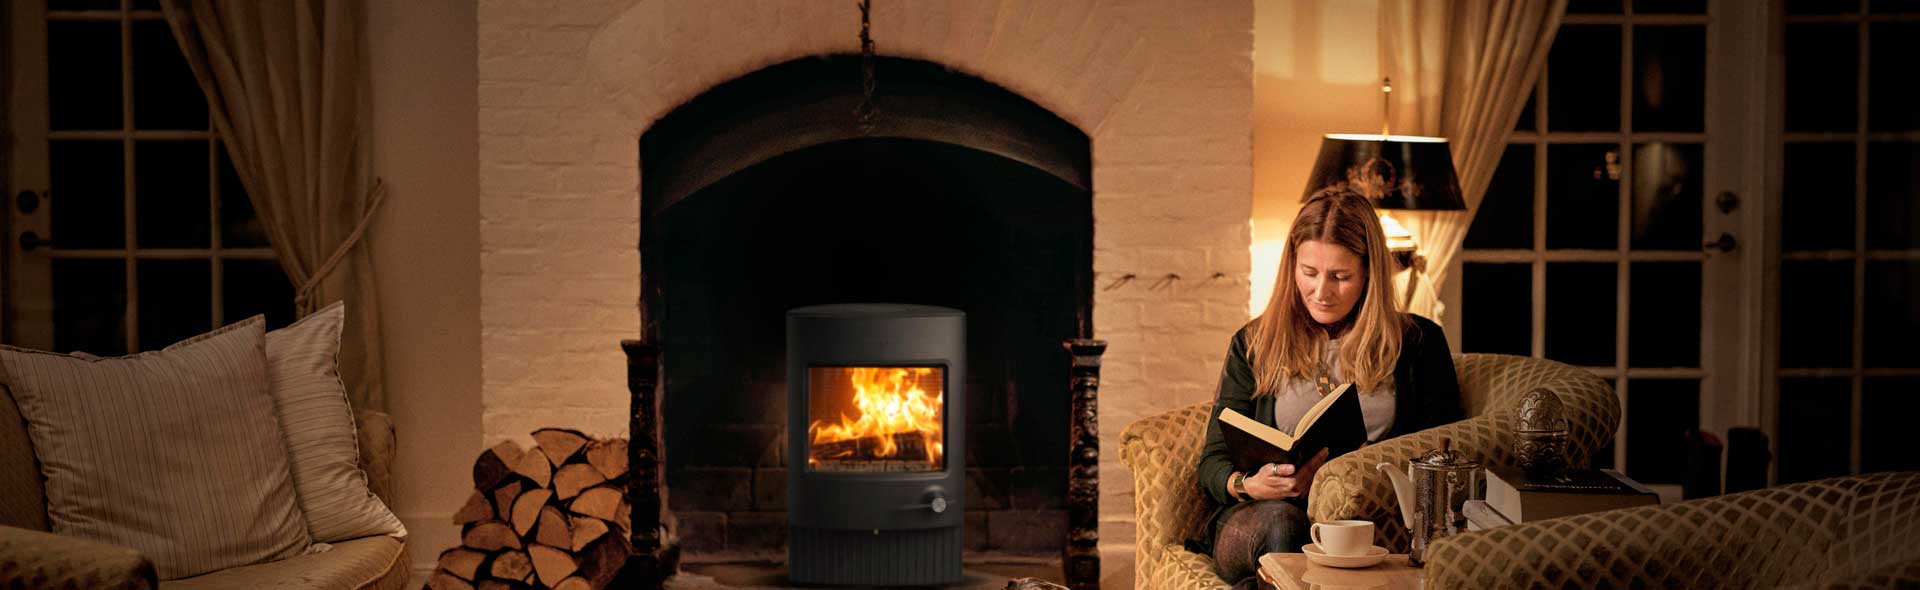 Dorset Morso woodburner & multi-fuel stoves